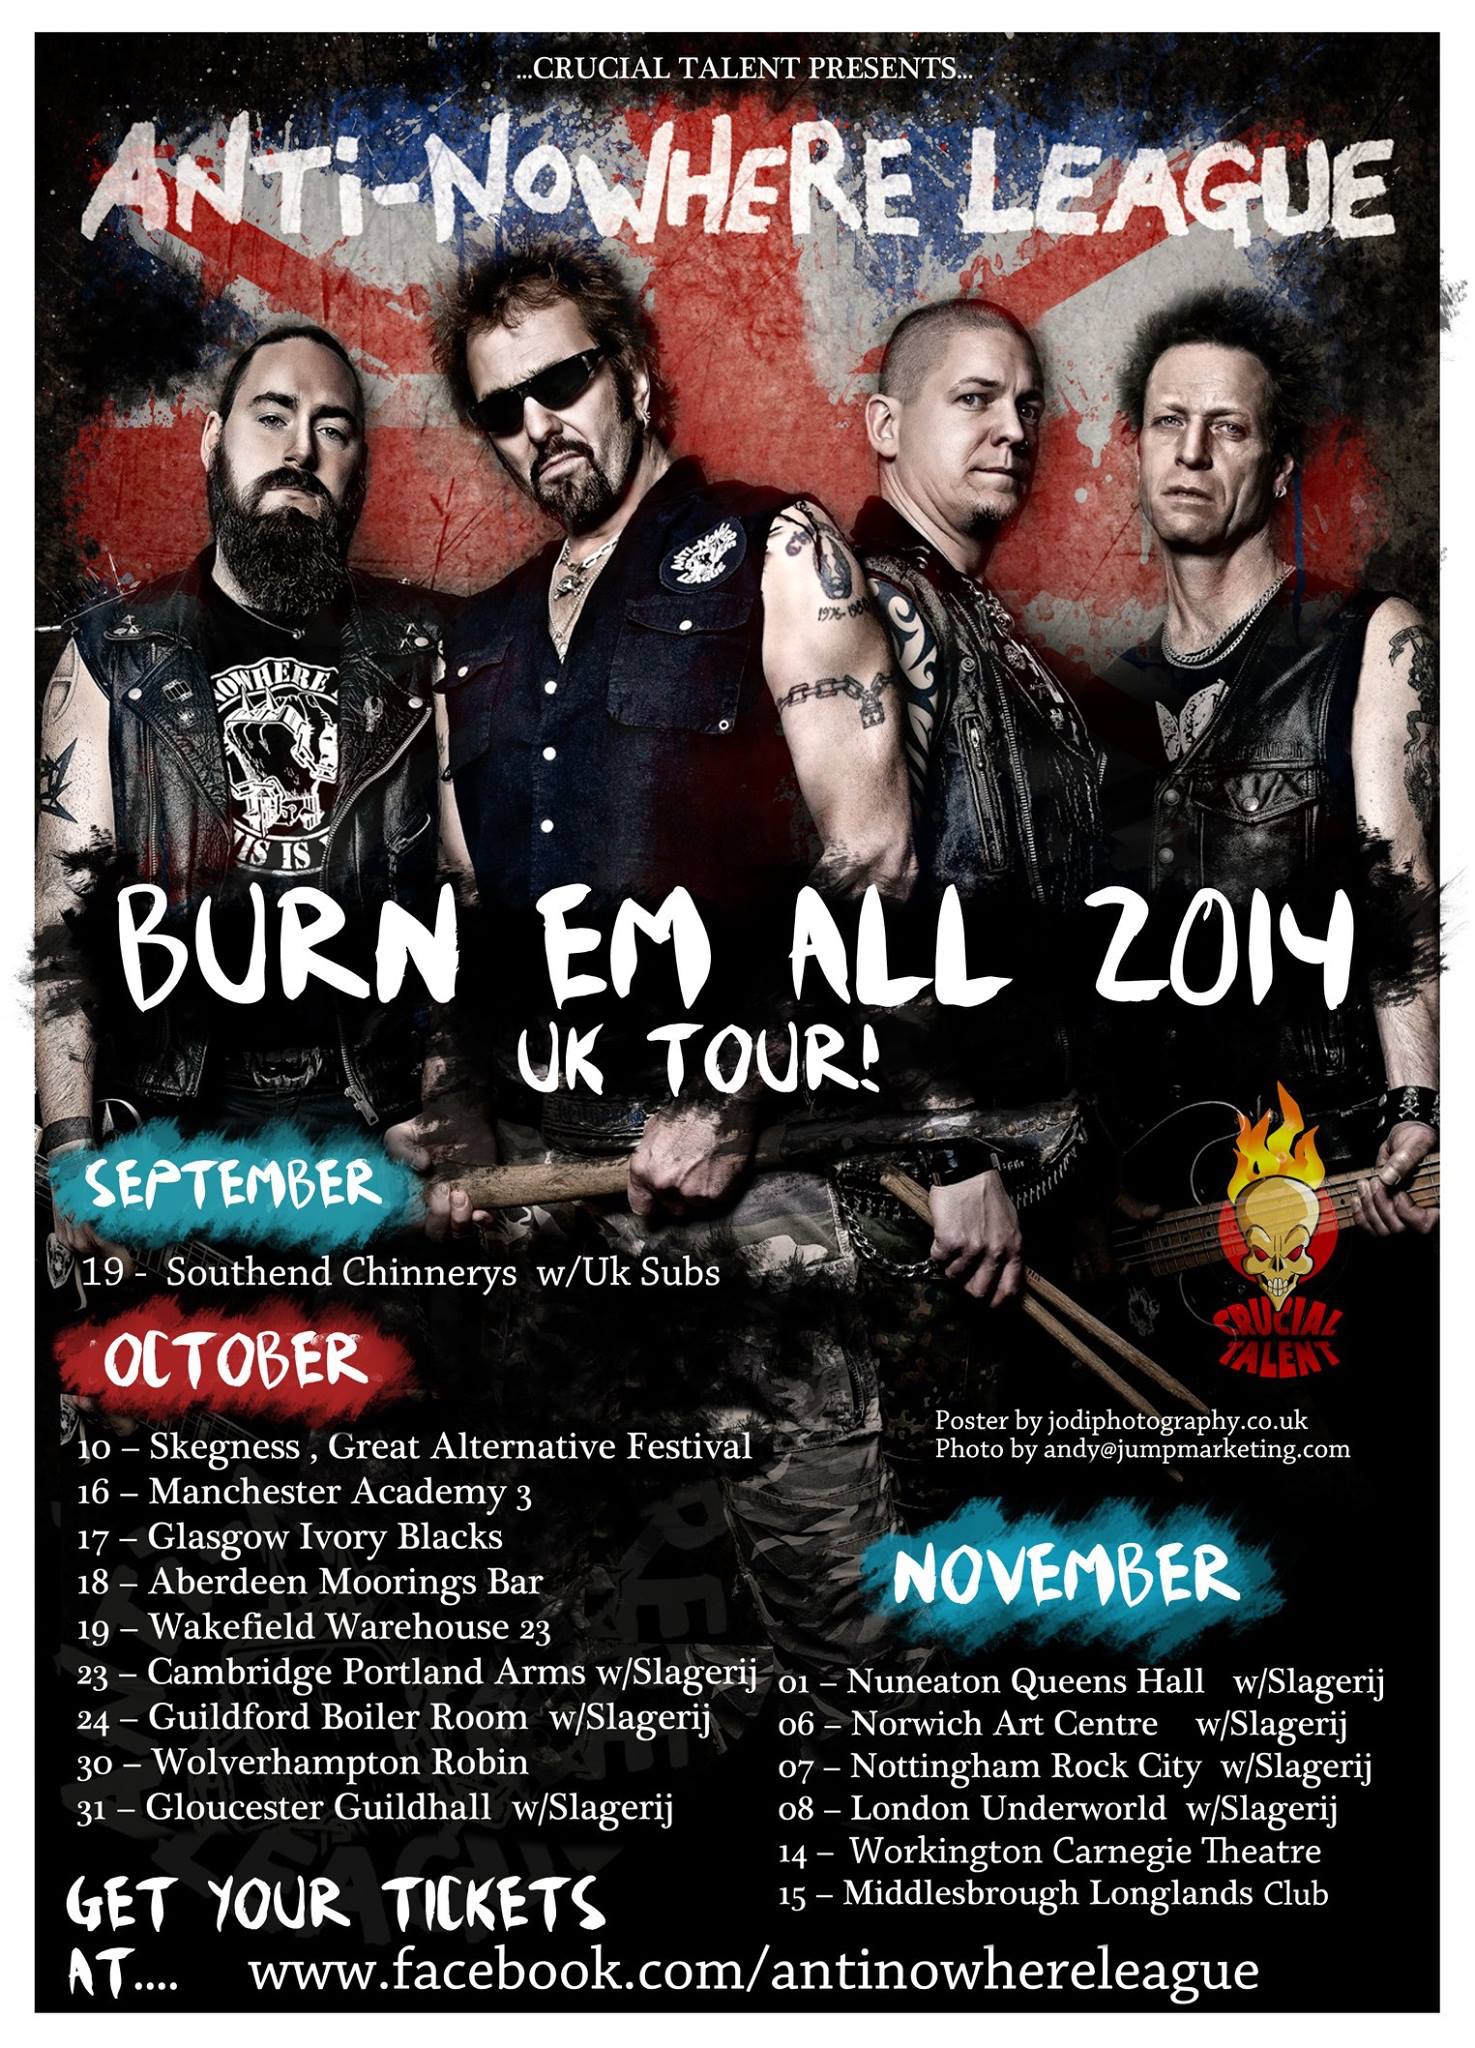 Anti-Nowhere League UK winter tour 2014